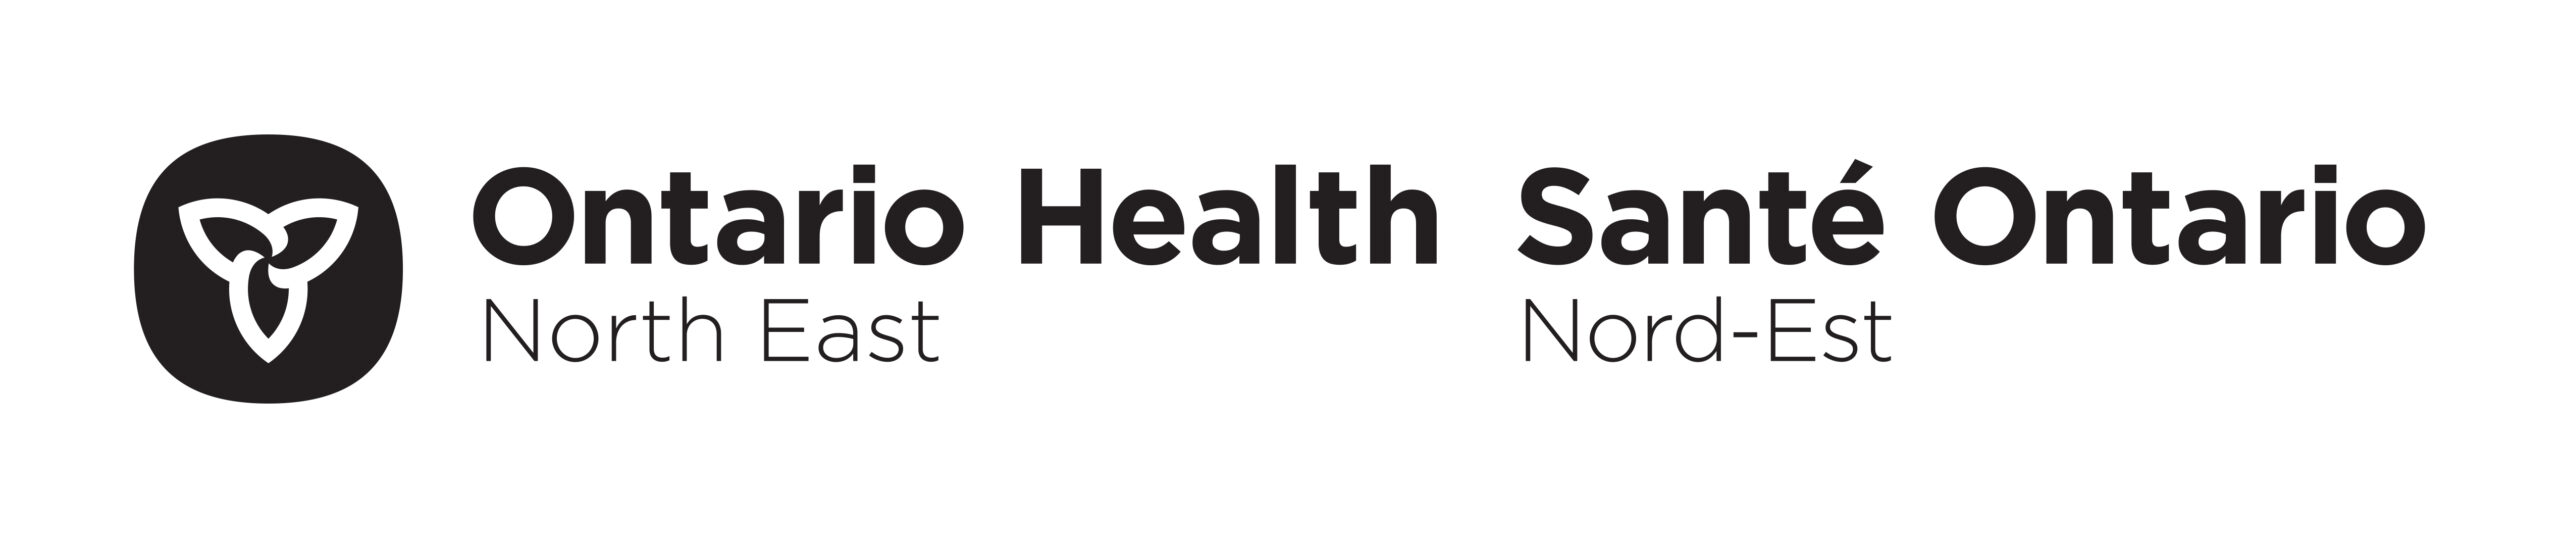 Ontario Health (North East) logo, logo de Santé Ontario (Nord-Est)